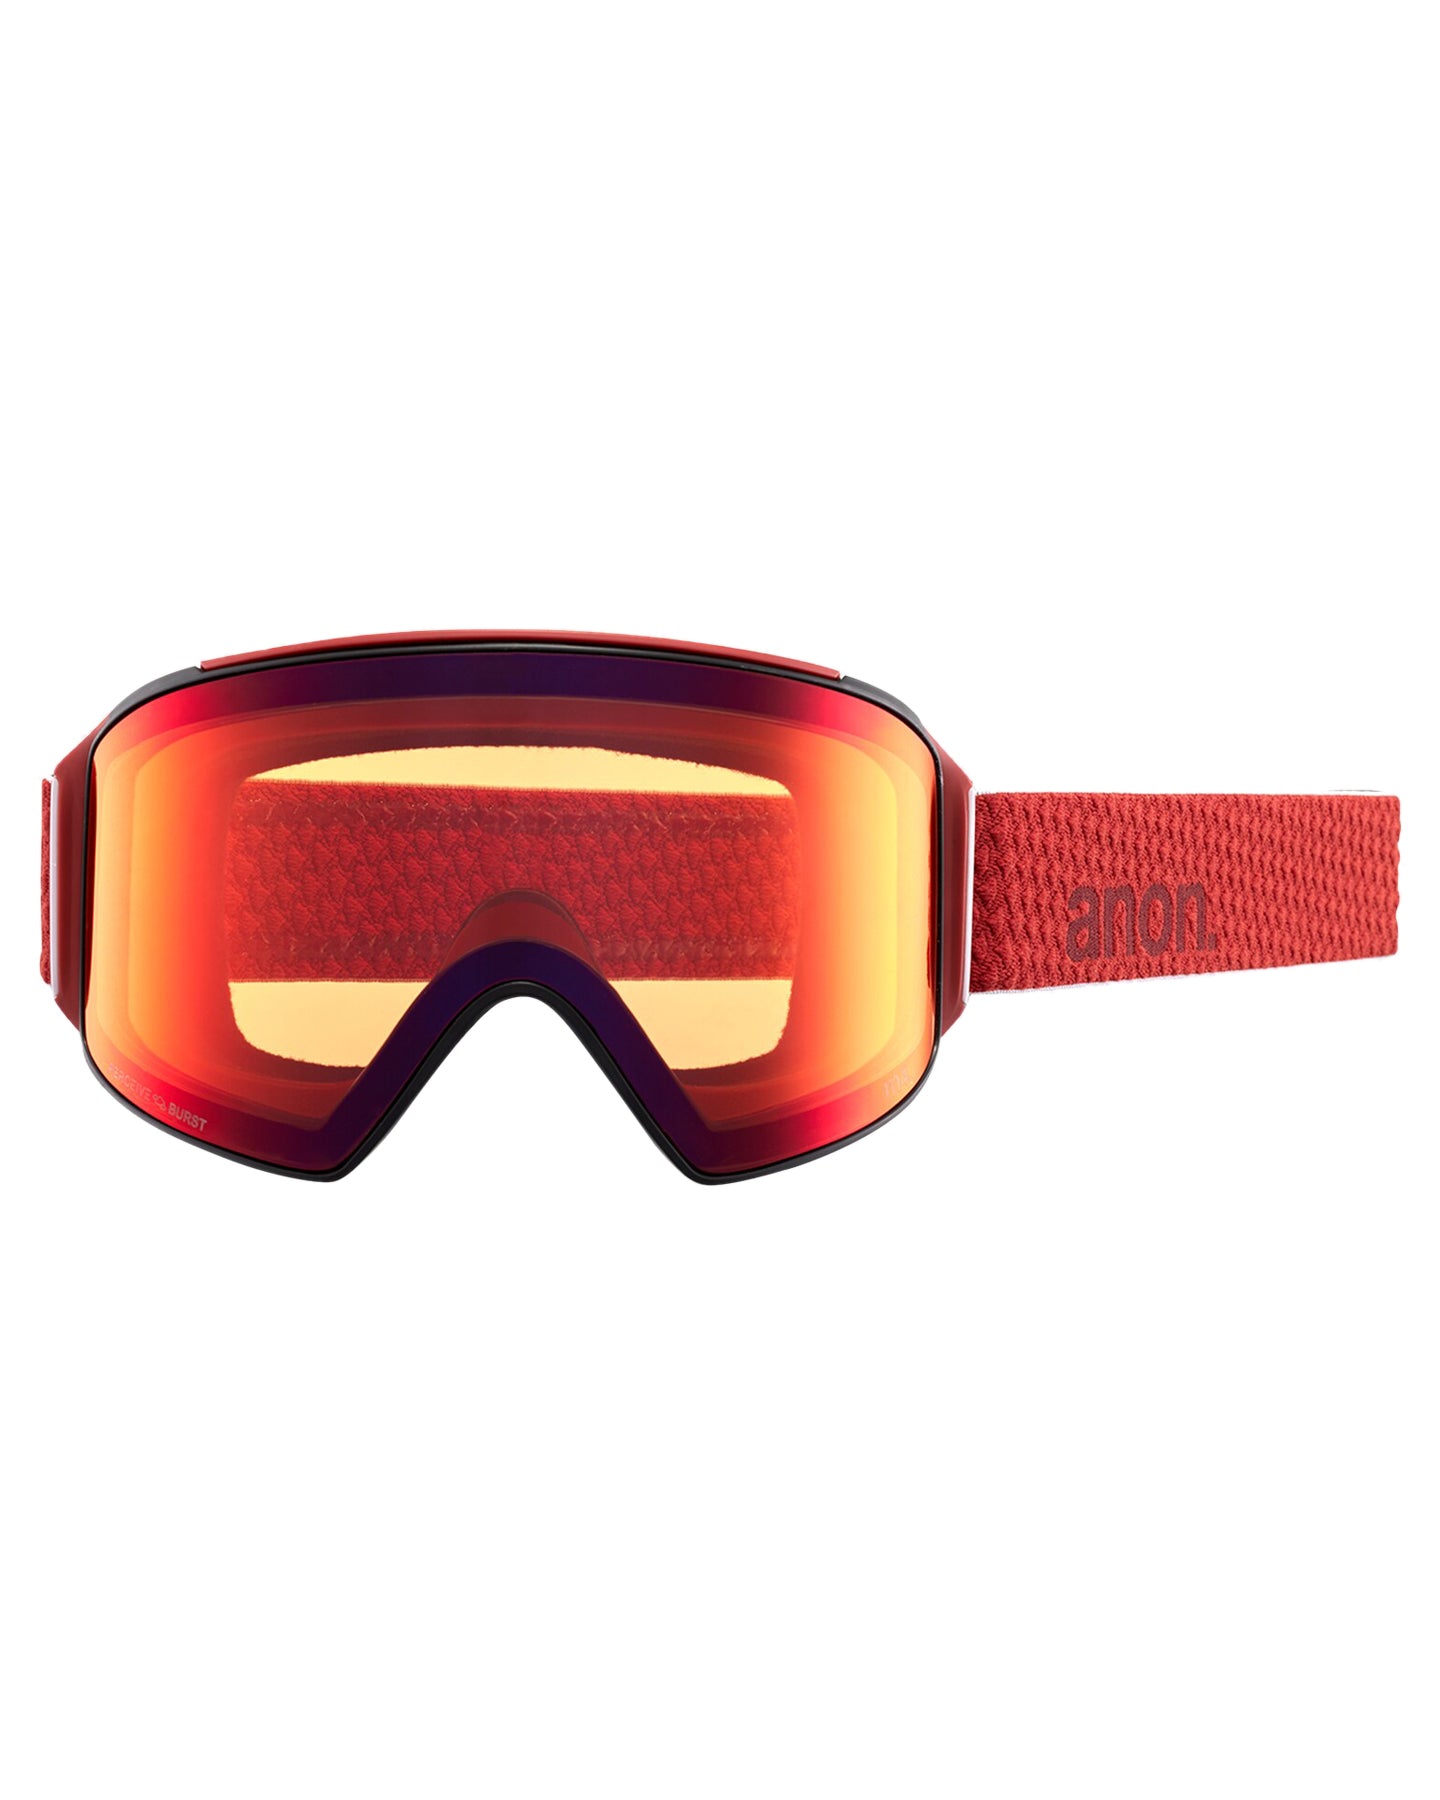 Anon M4 Cylindrical Snow Goggles + Bonus Lens + Mfi® Face Mask - Mars/Perceive Sunny Red Lens Men's Snow Goggles - Trojan Wake Ski Snow